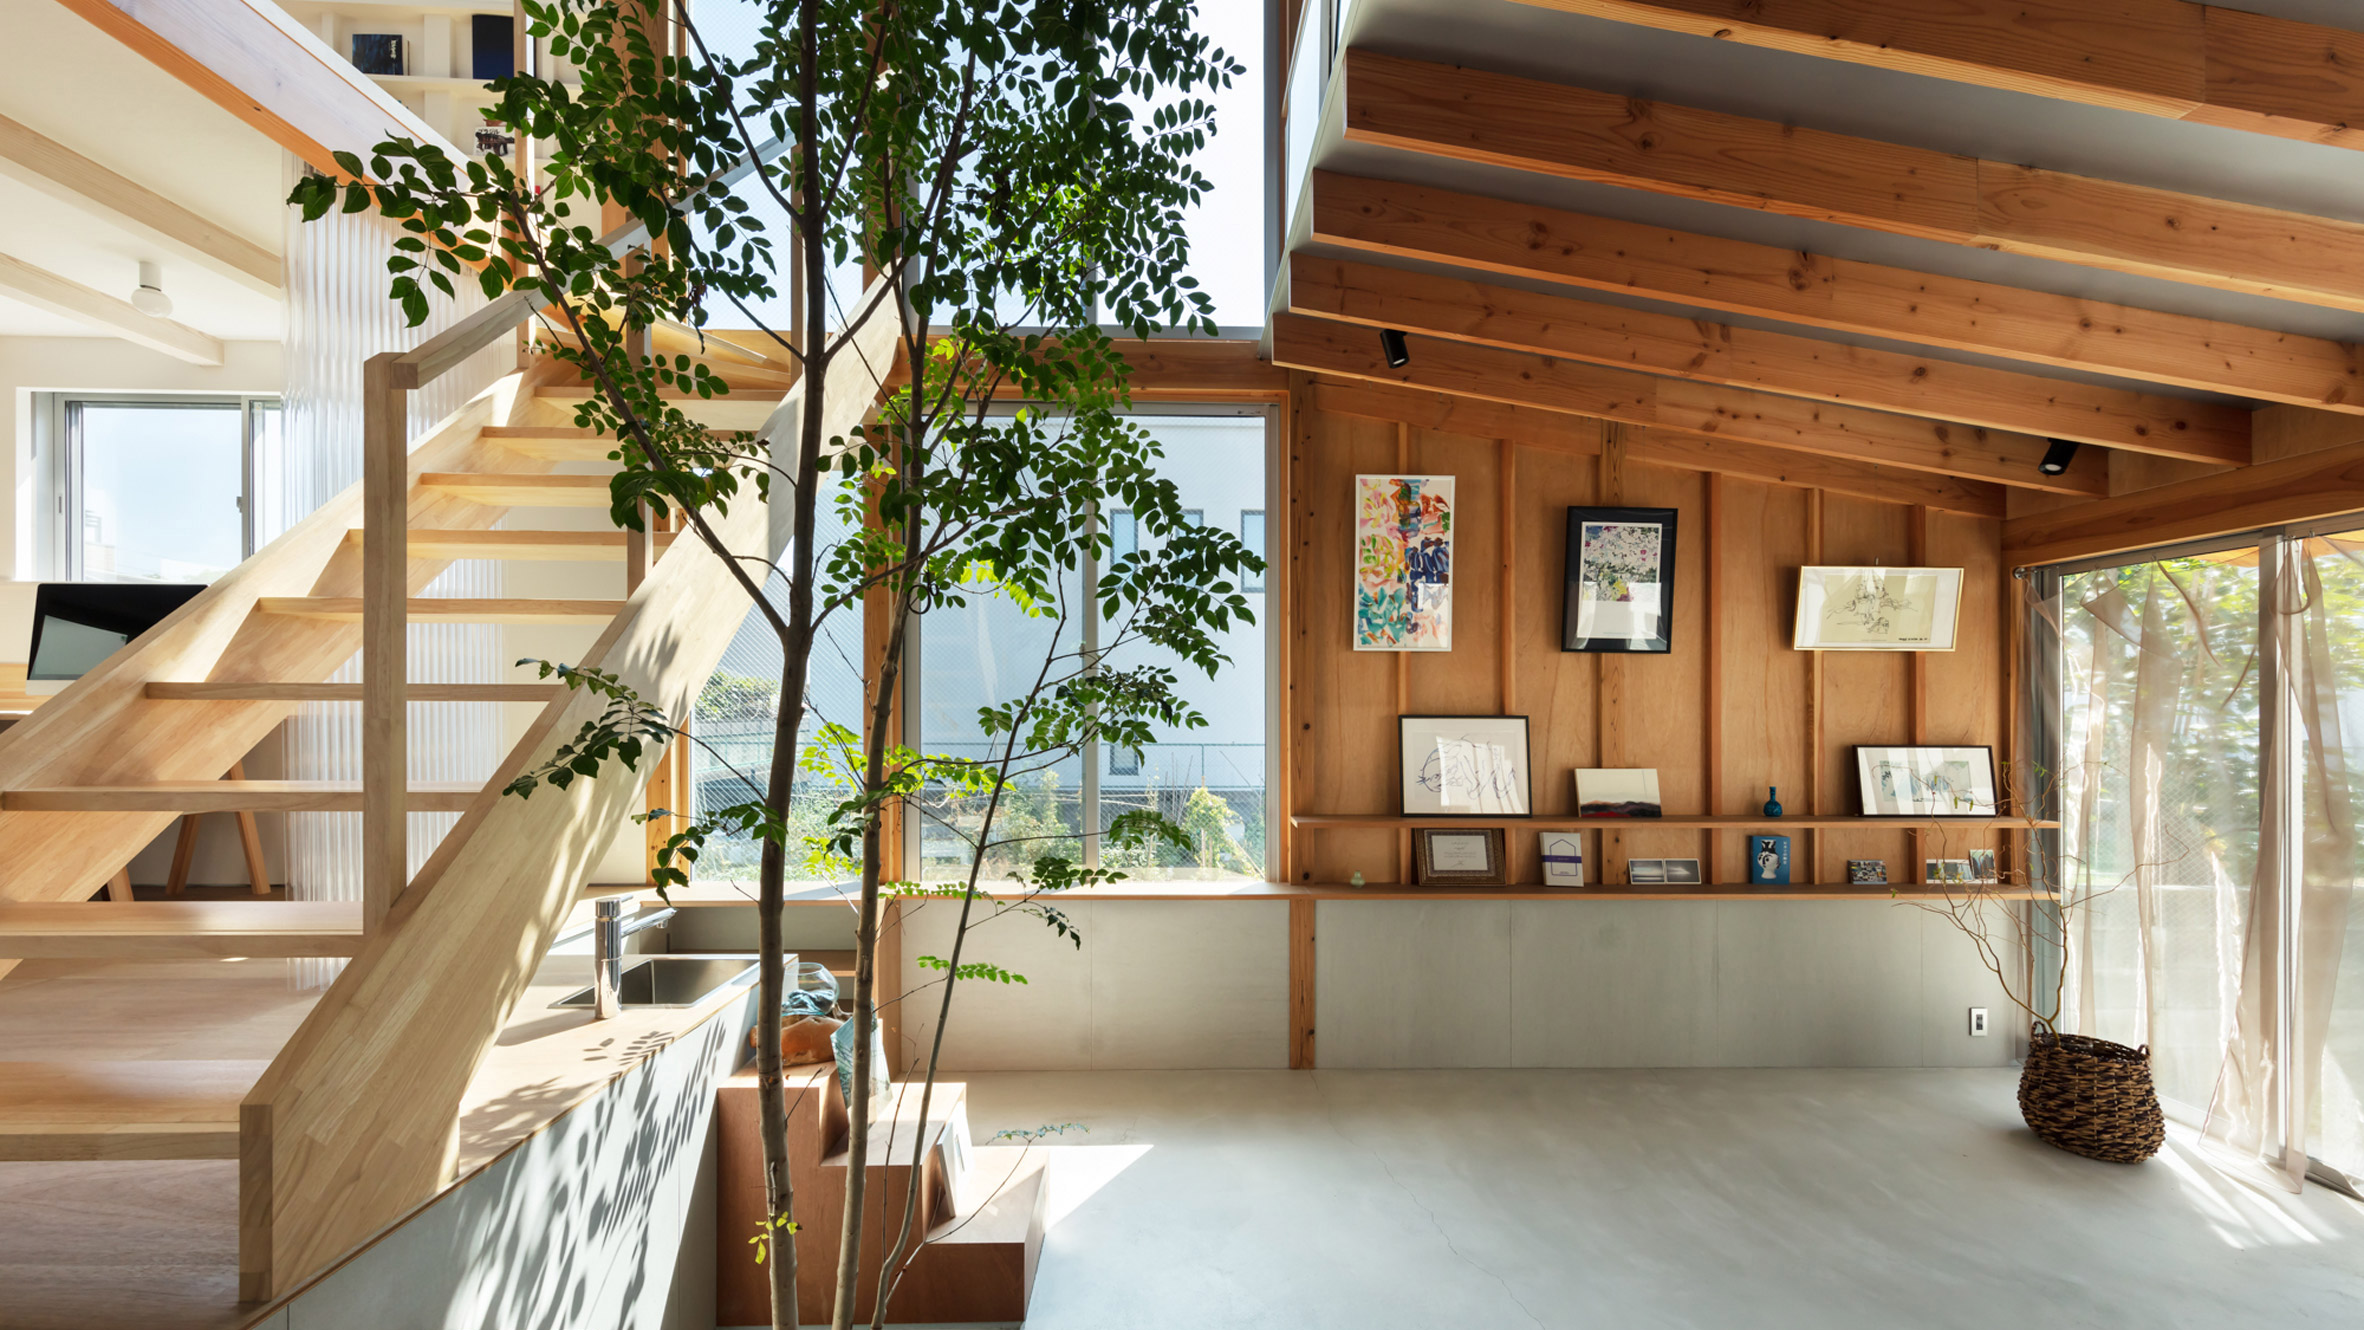 The atrium of a Japanese house